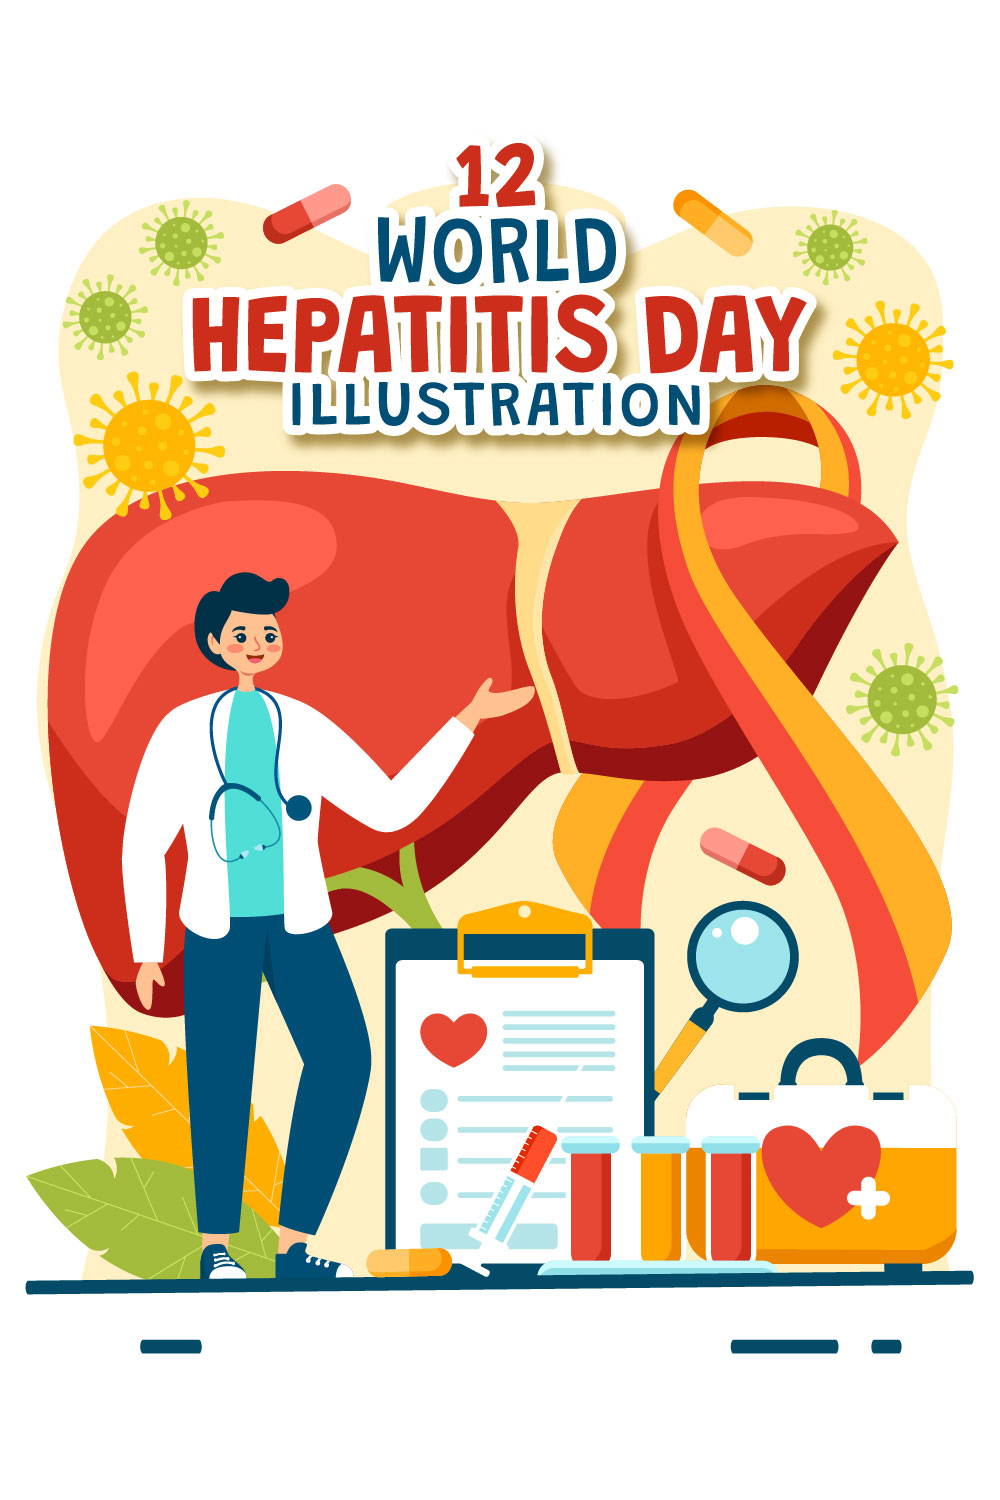 12 World Hepatitis Day Illustration pinterest preview image.